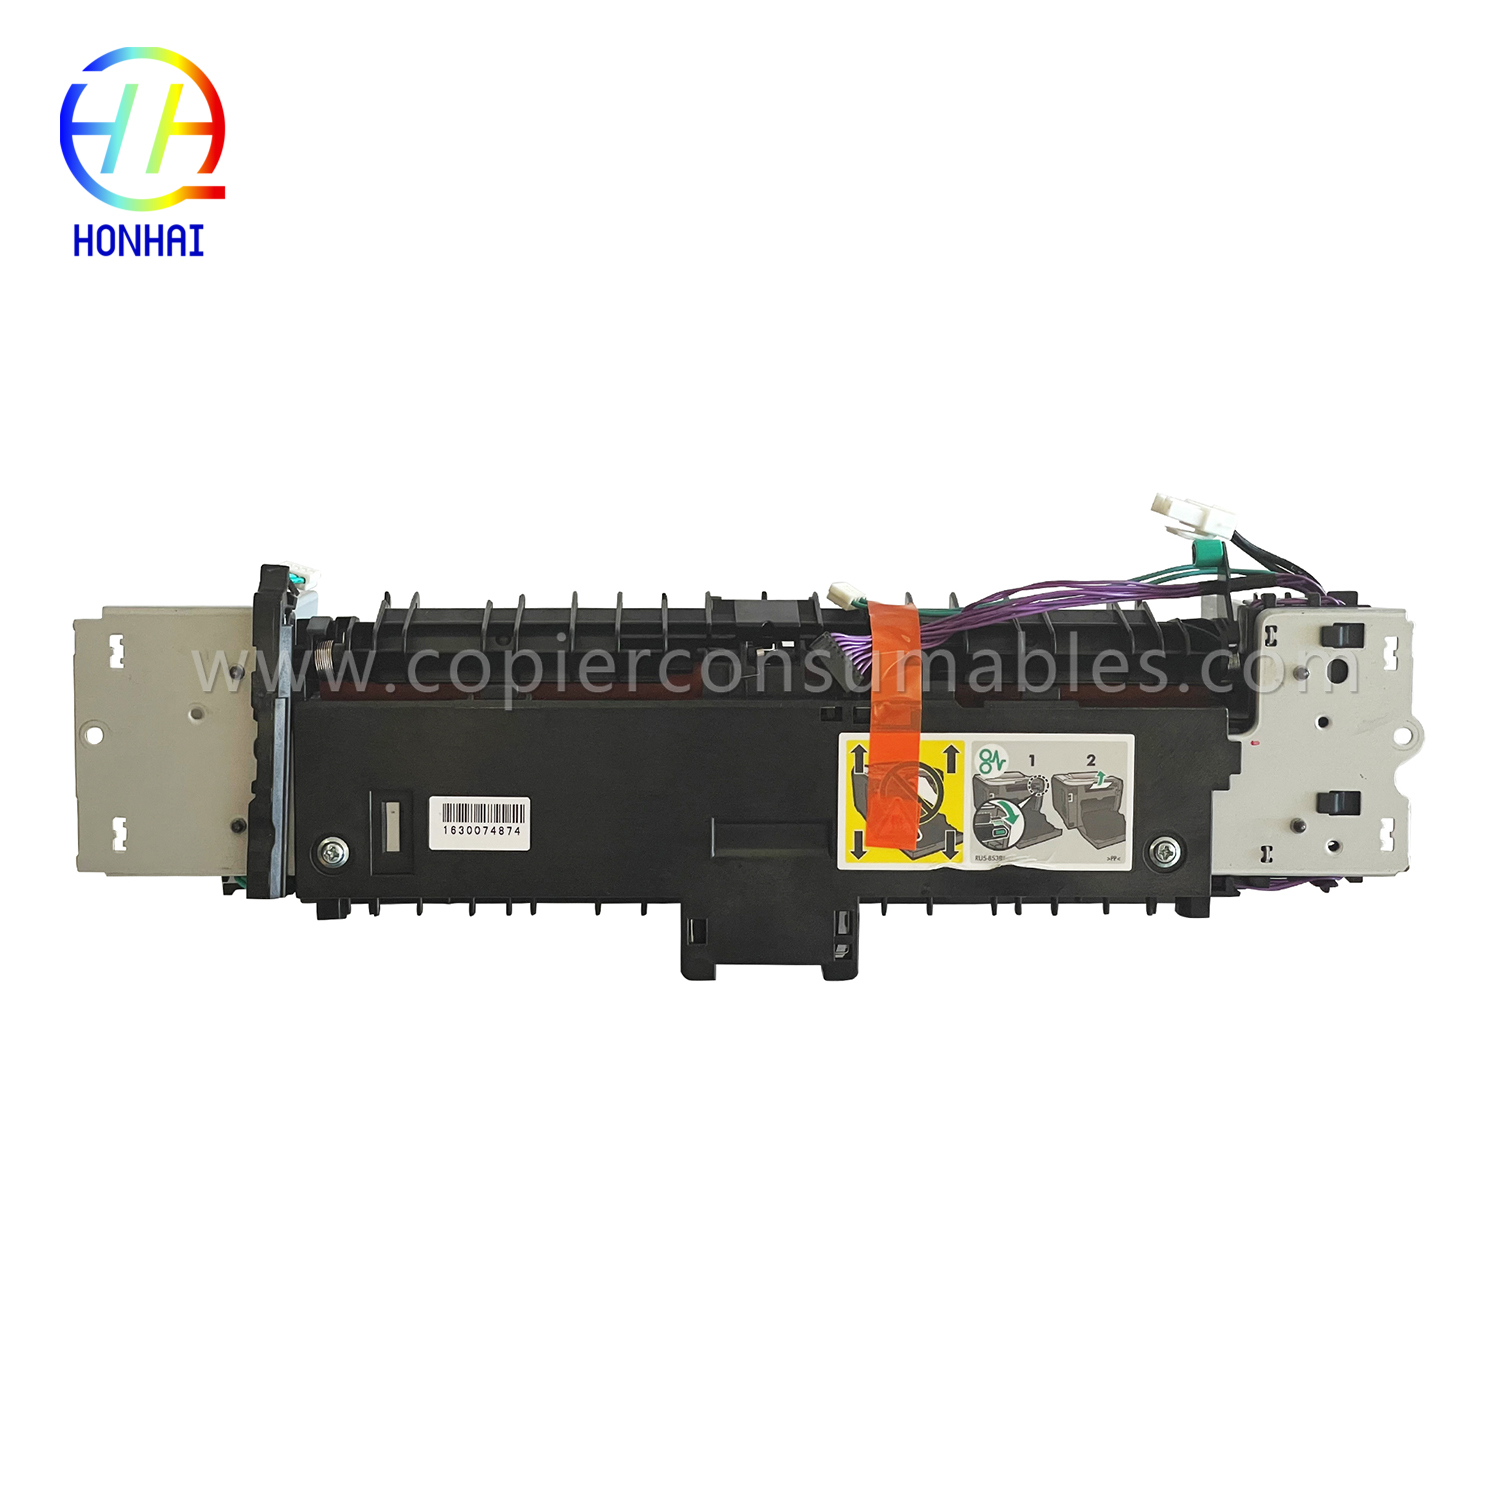 Unità fusore per HP Laserjet PRO 400 Color Mfp M475dn M475dw (RM2-5478-000)